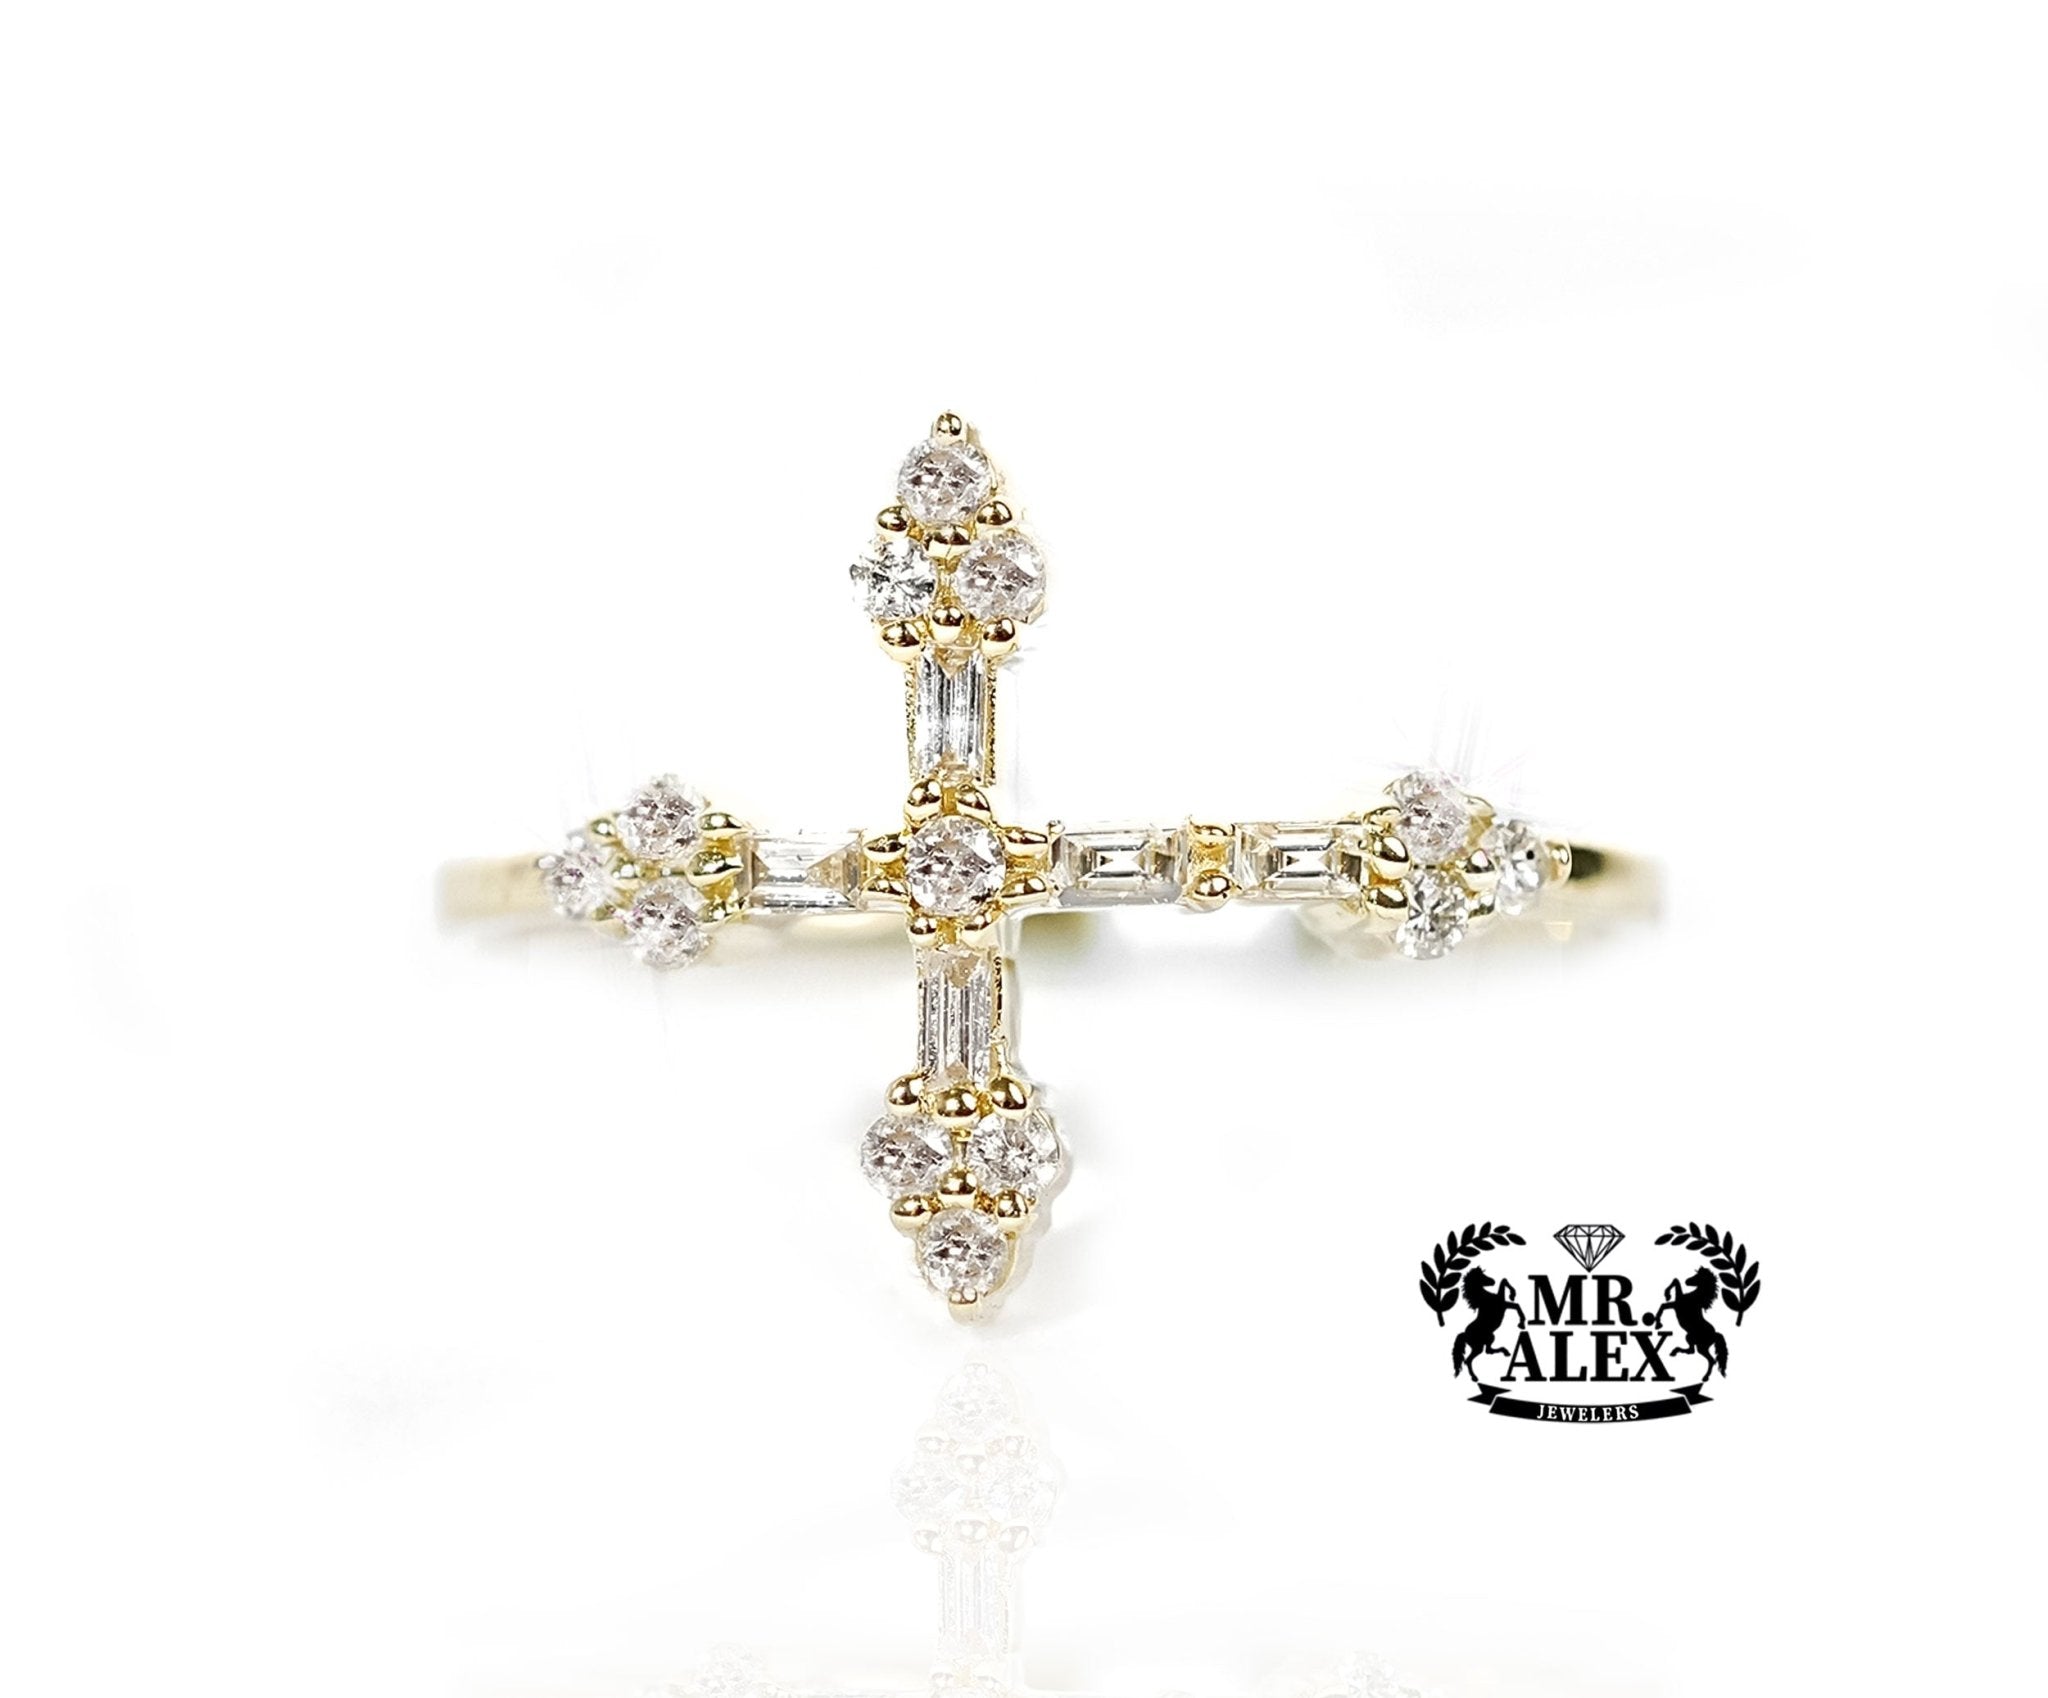 10k Gold Elegant Cross Diamond Ring 0.25ct - Mr. Alex Jewelry